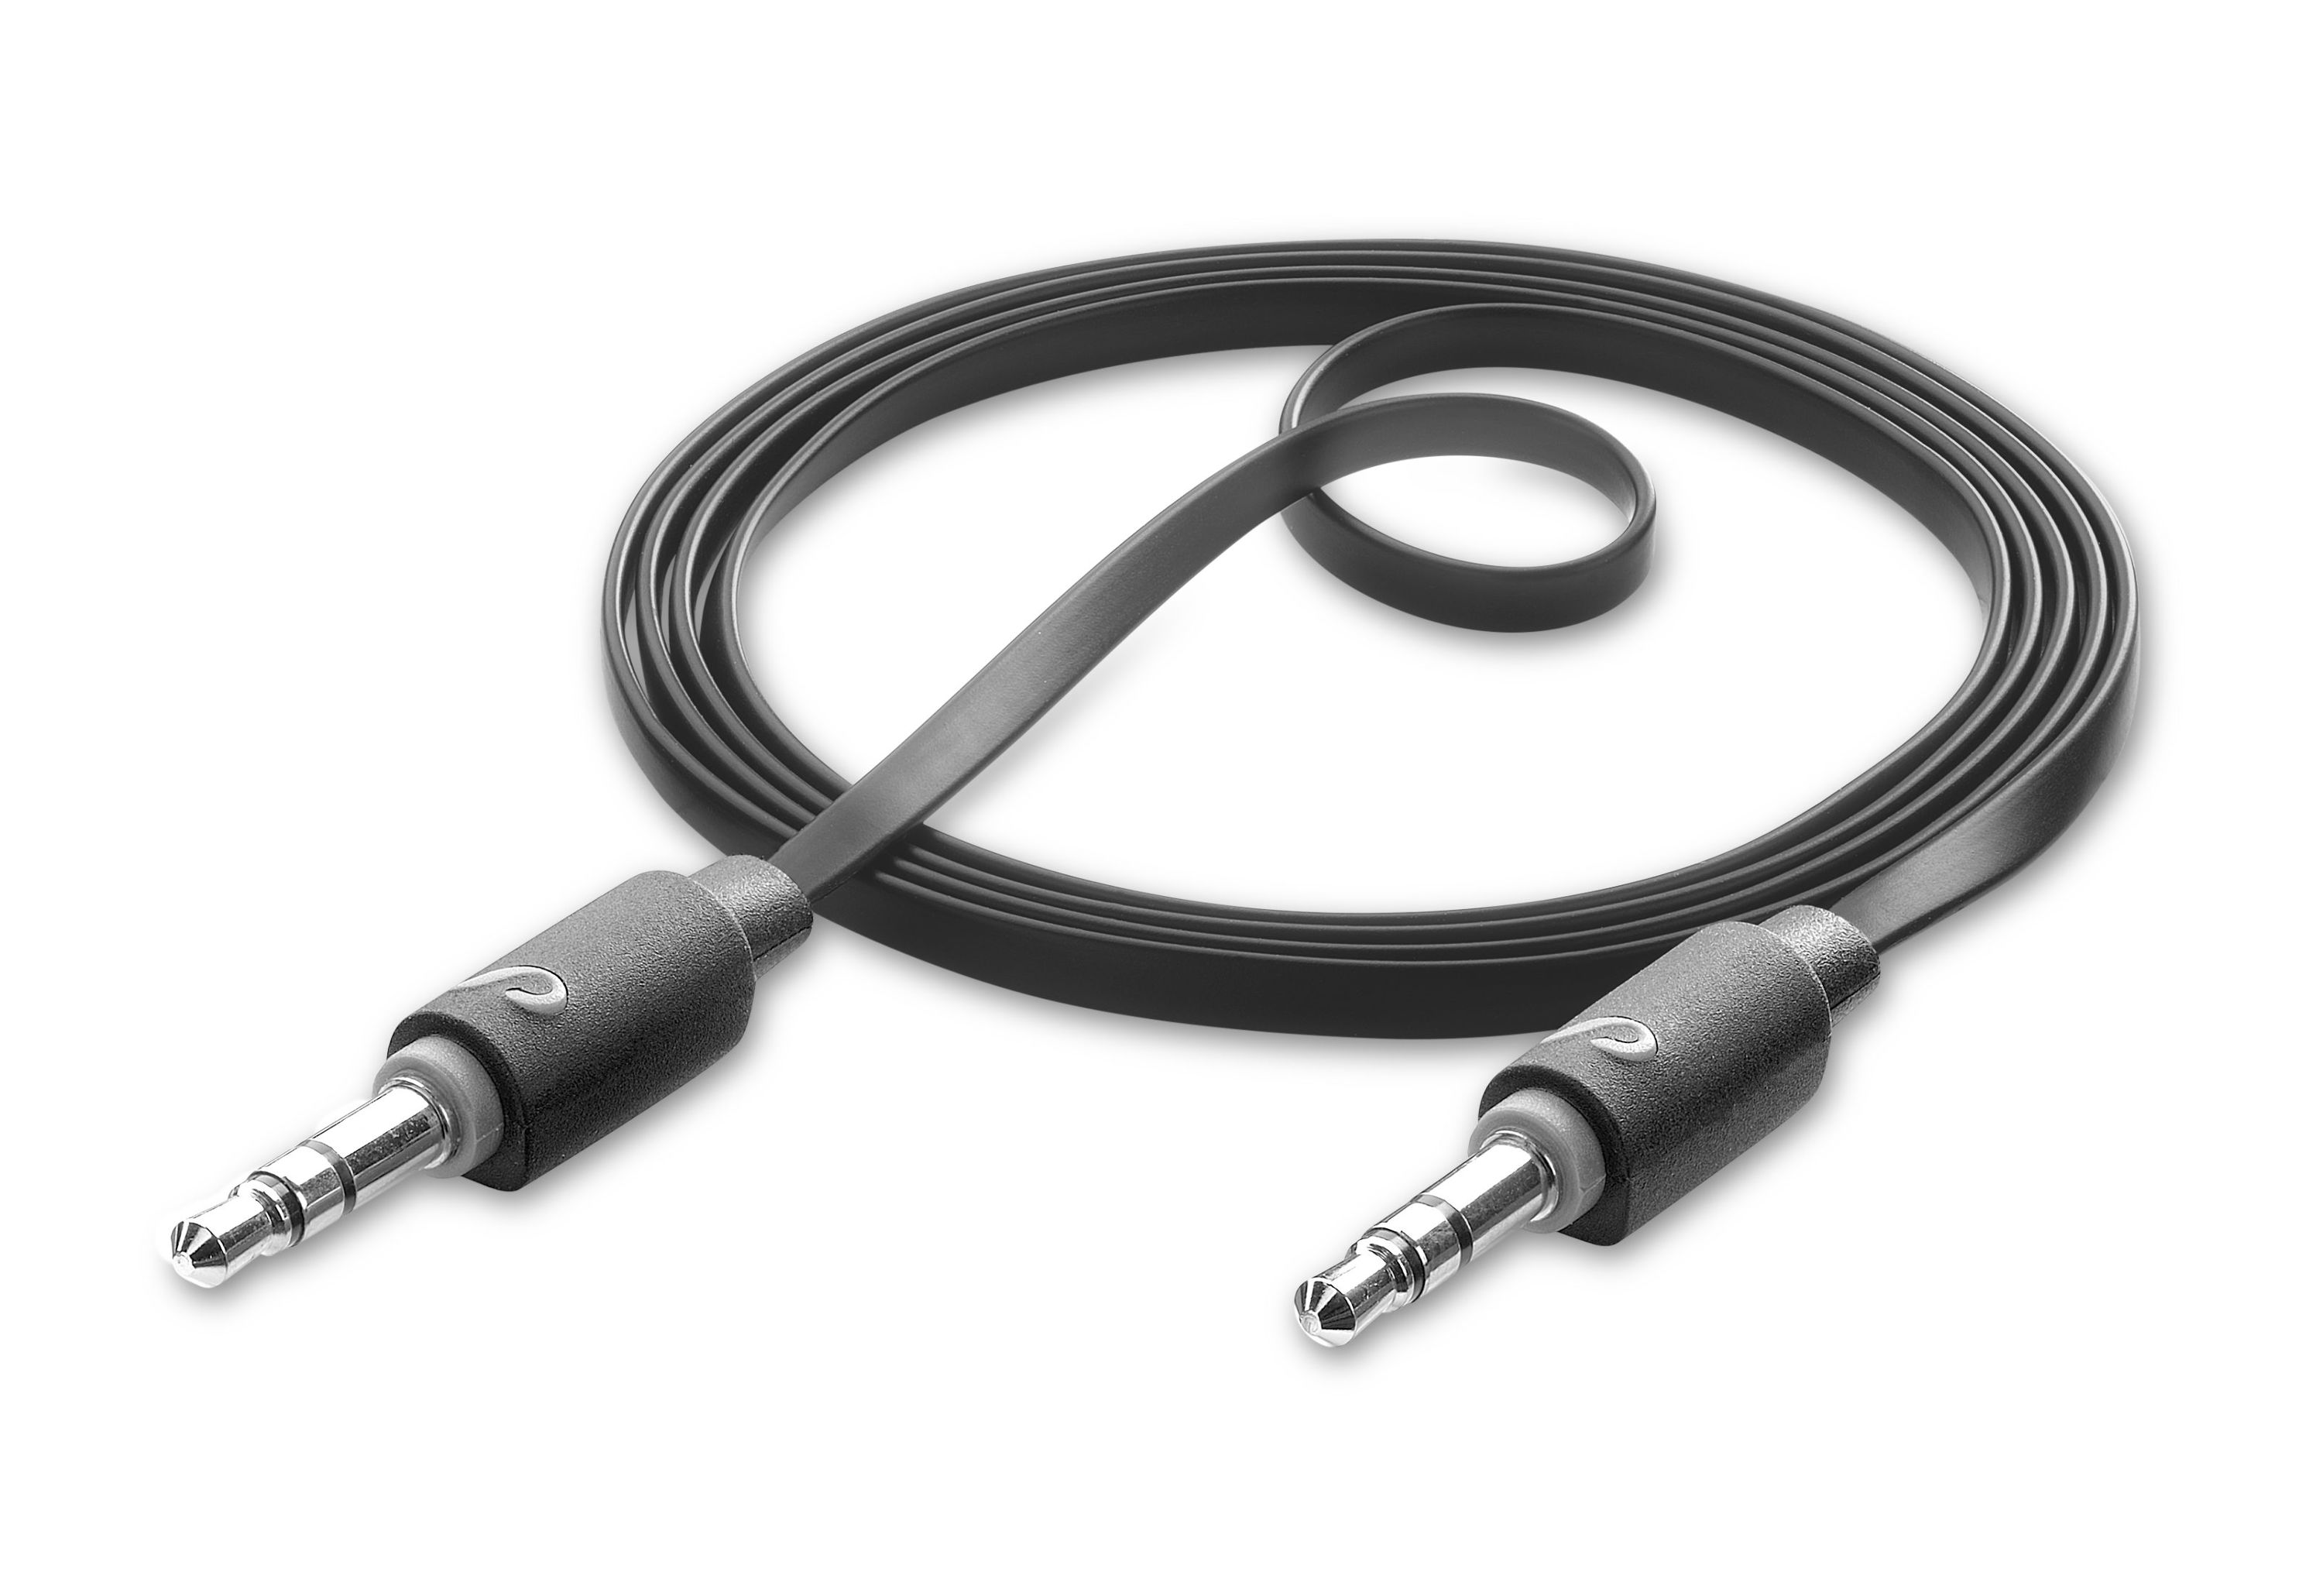 Aux audio kabel, 3,5mm to 3,5mm jack, 1m, zwart